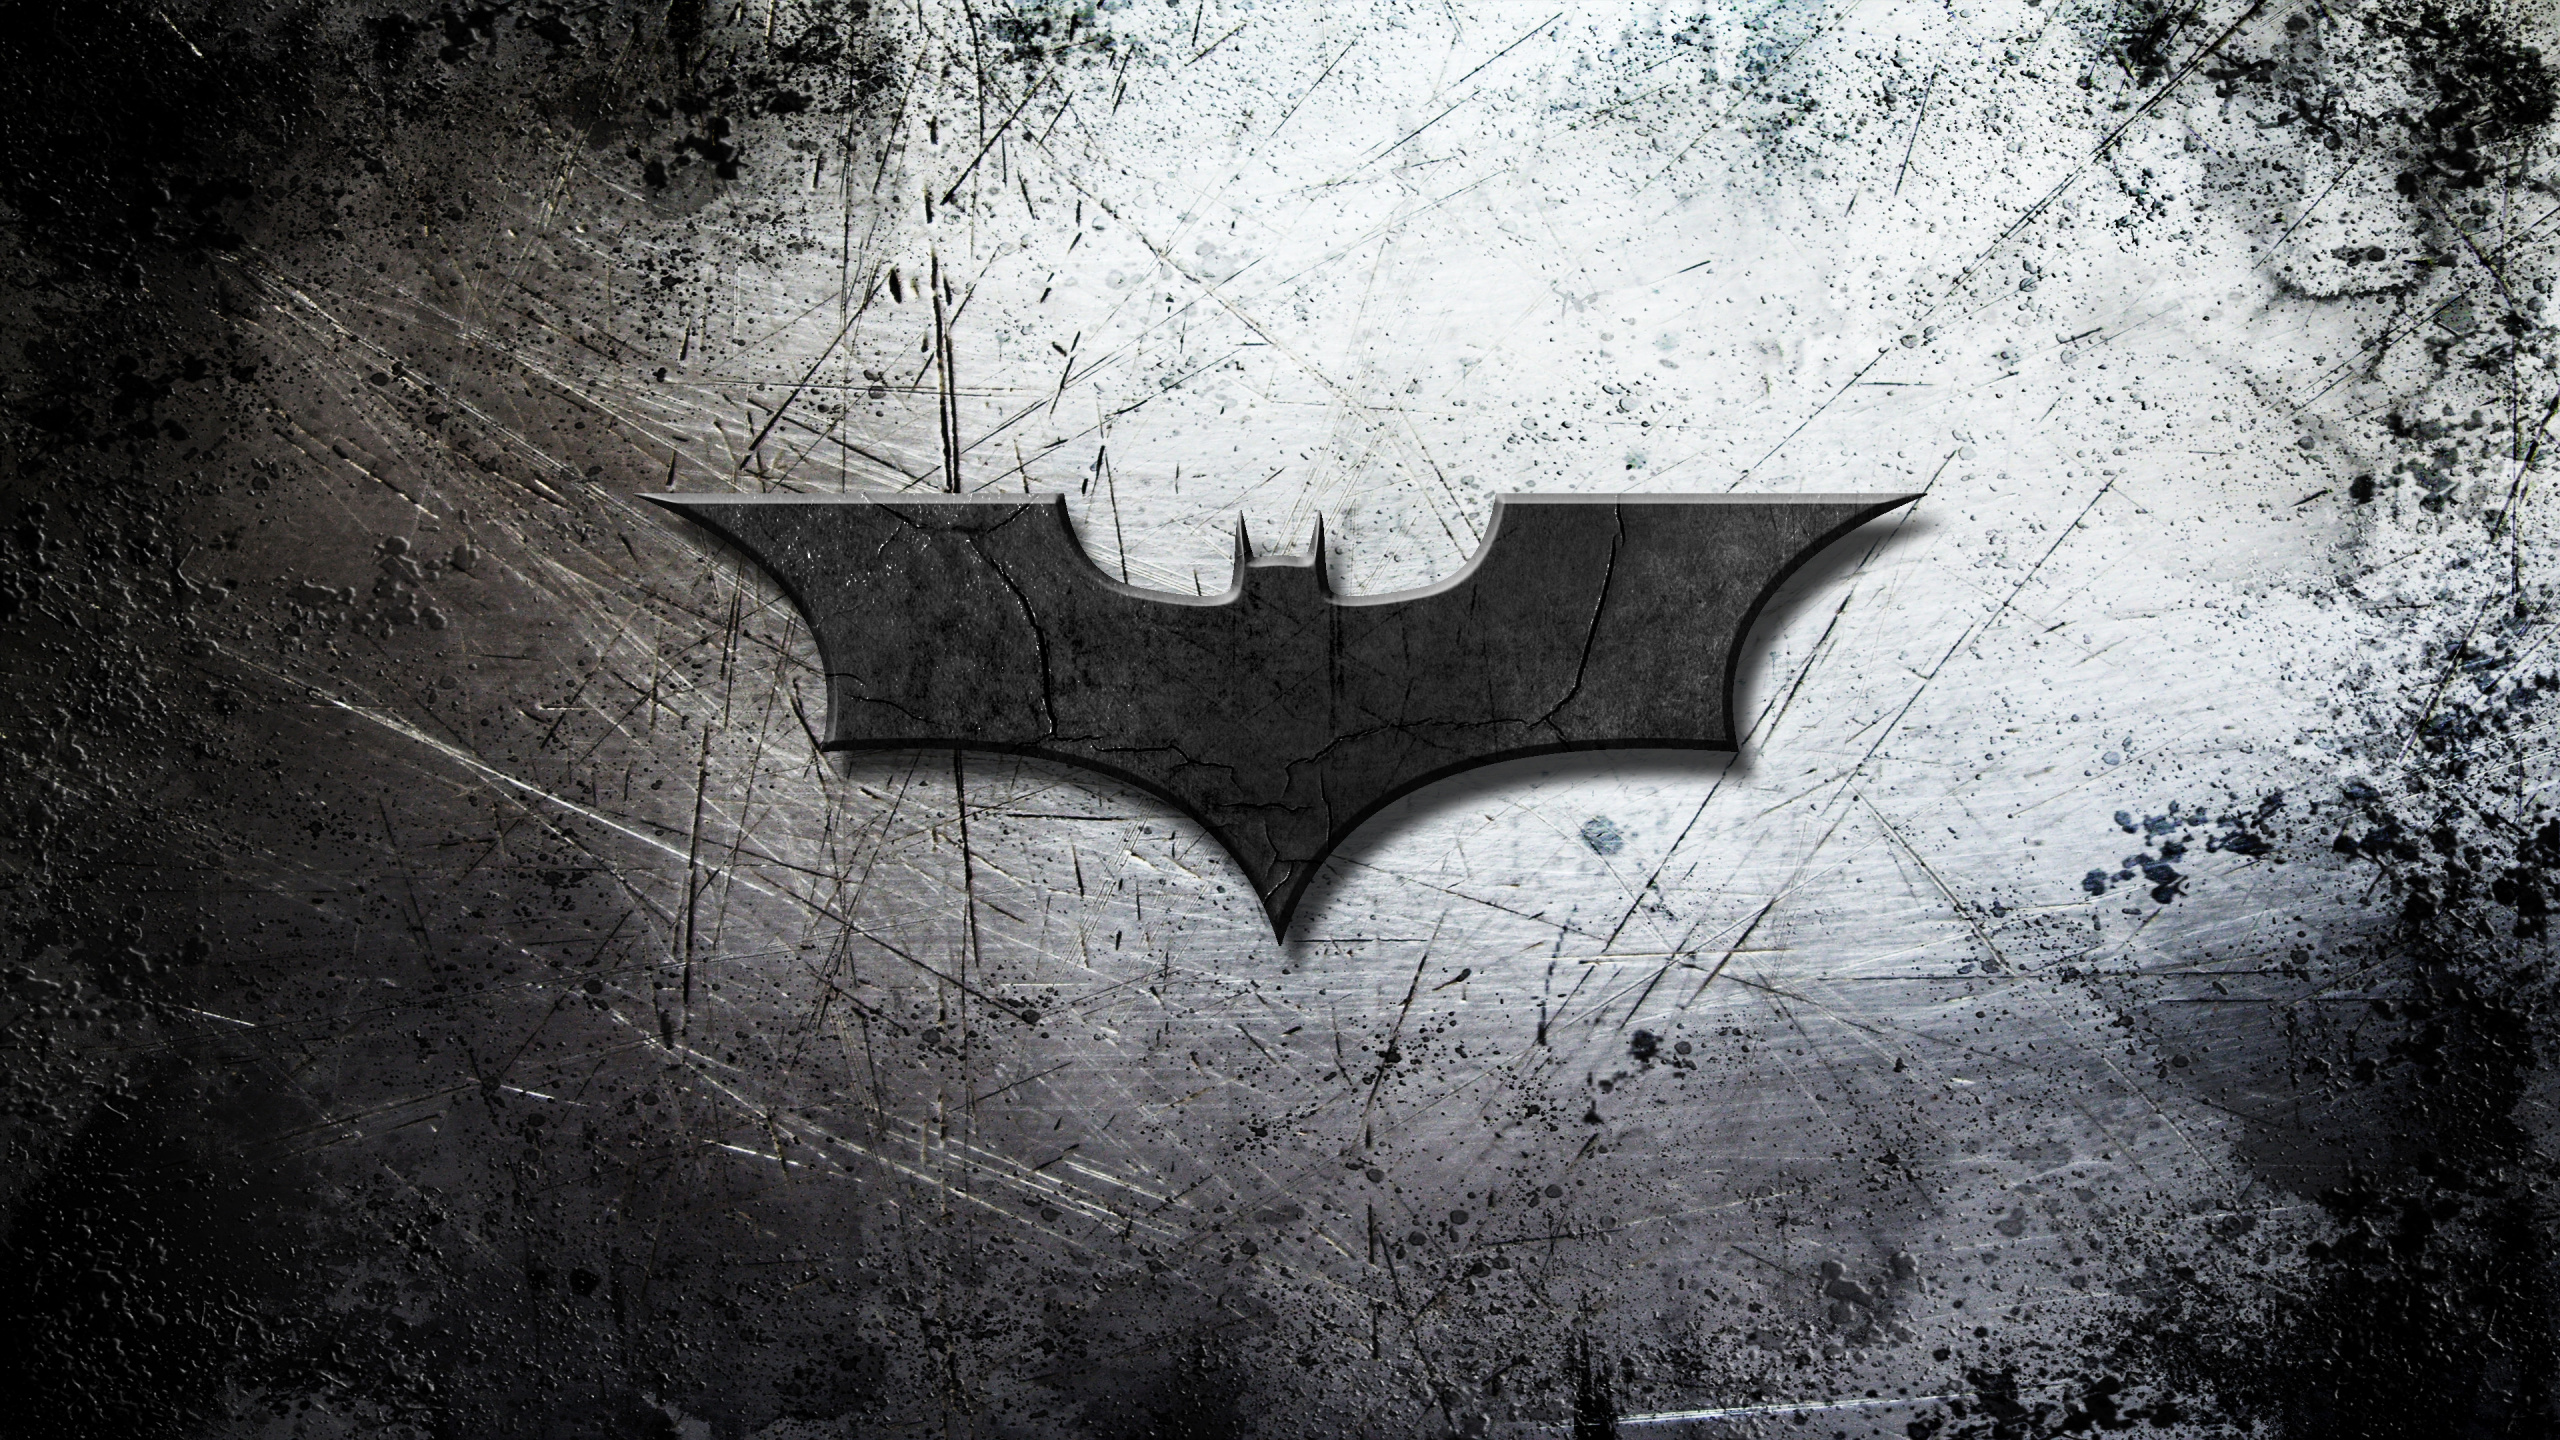 Batman WQHD, QHD, 16:9 Wallpapers, HD Batman 2560x1440 Backgrounds, Free  Images Download